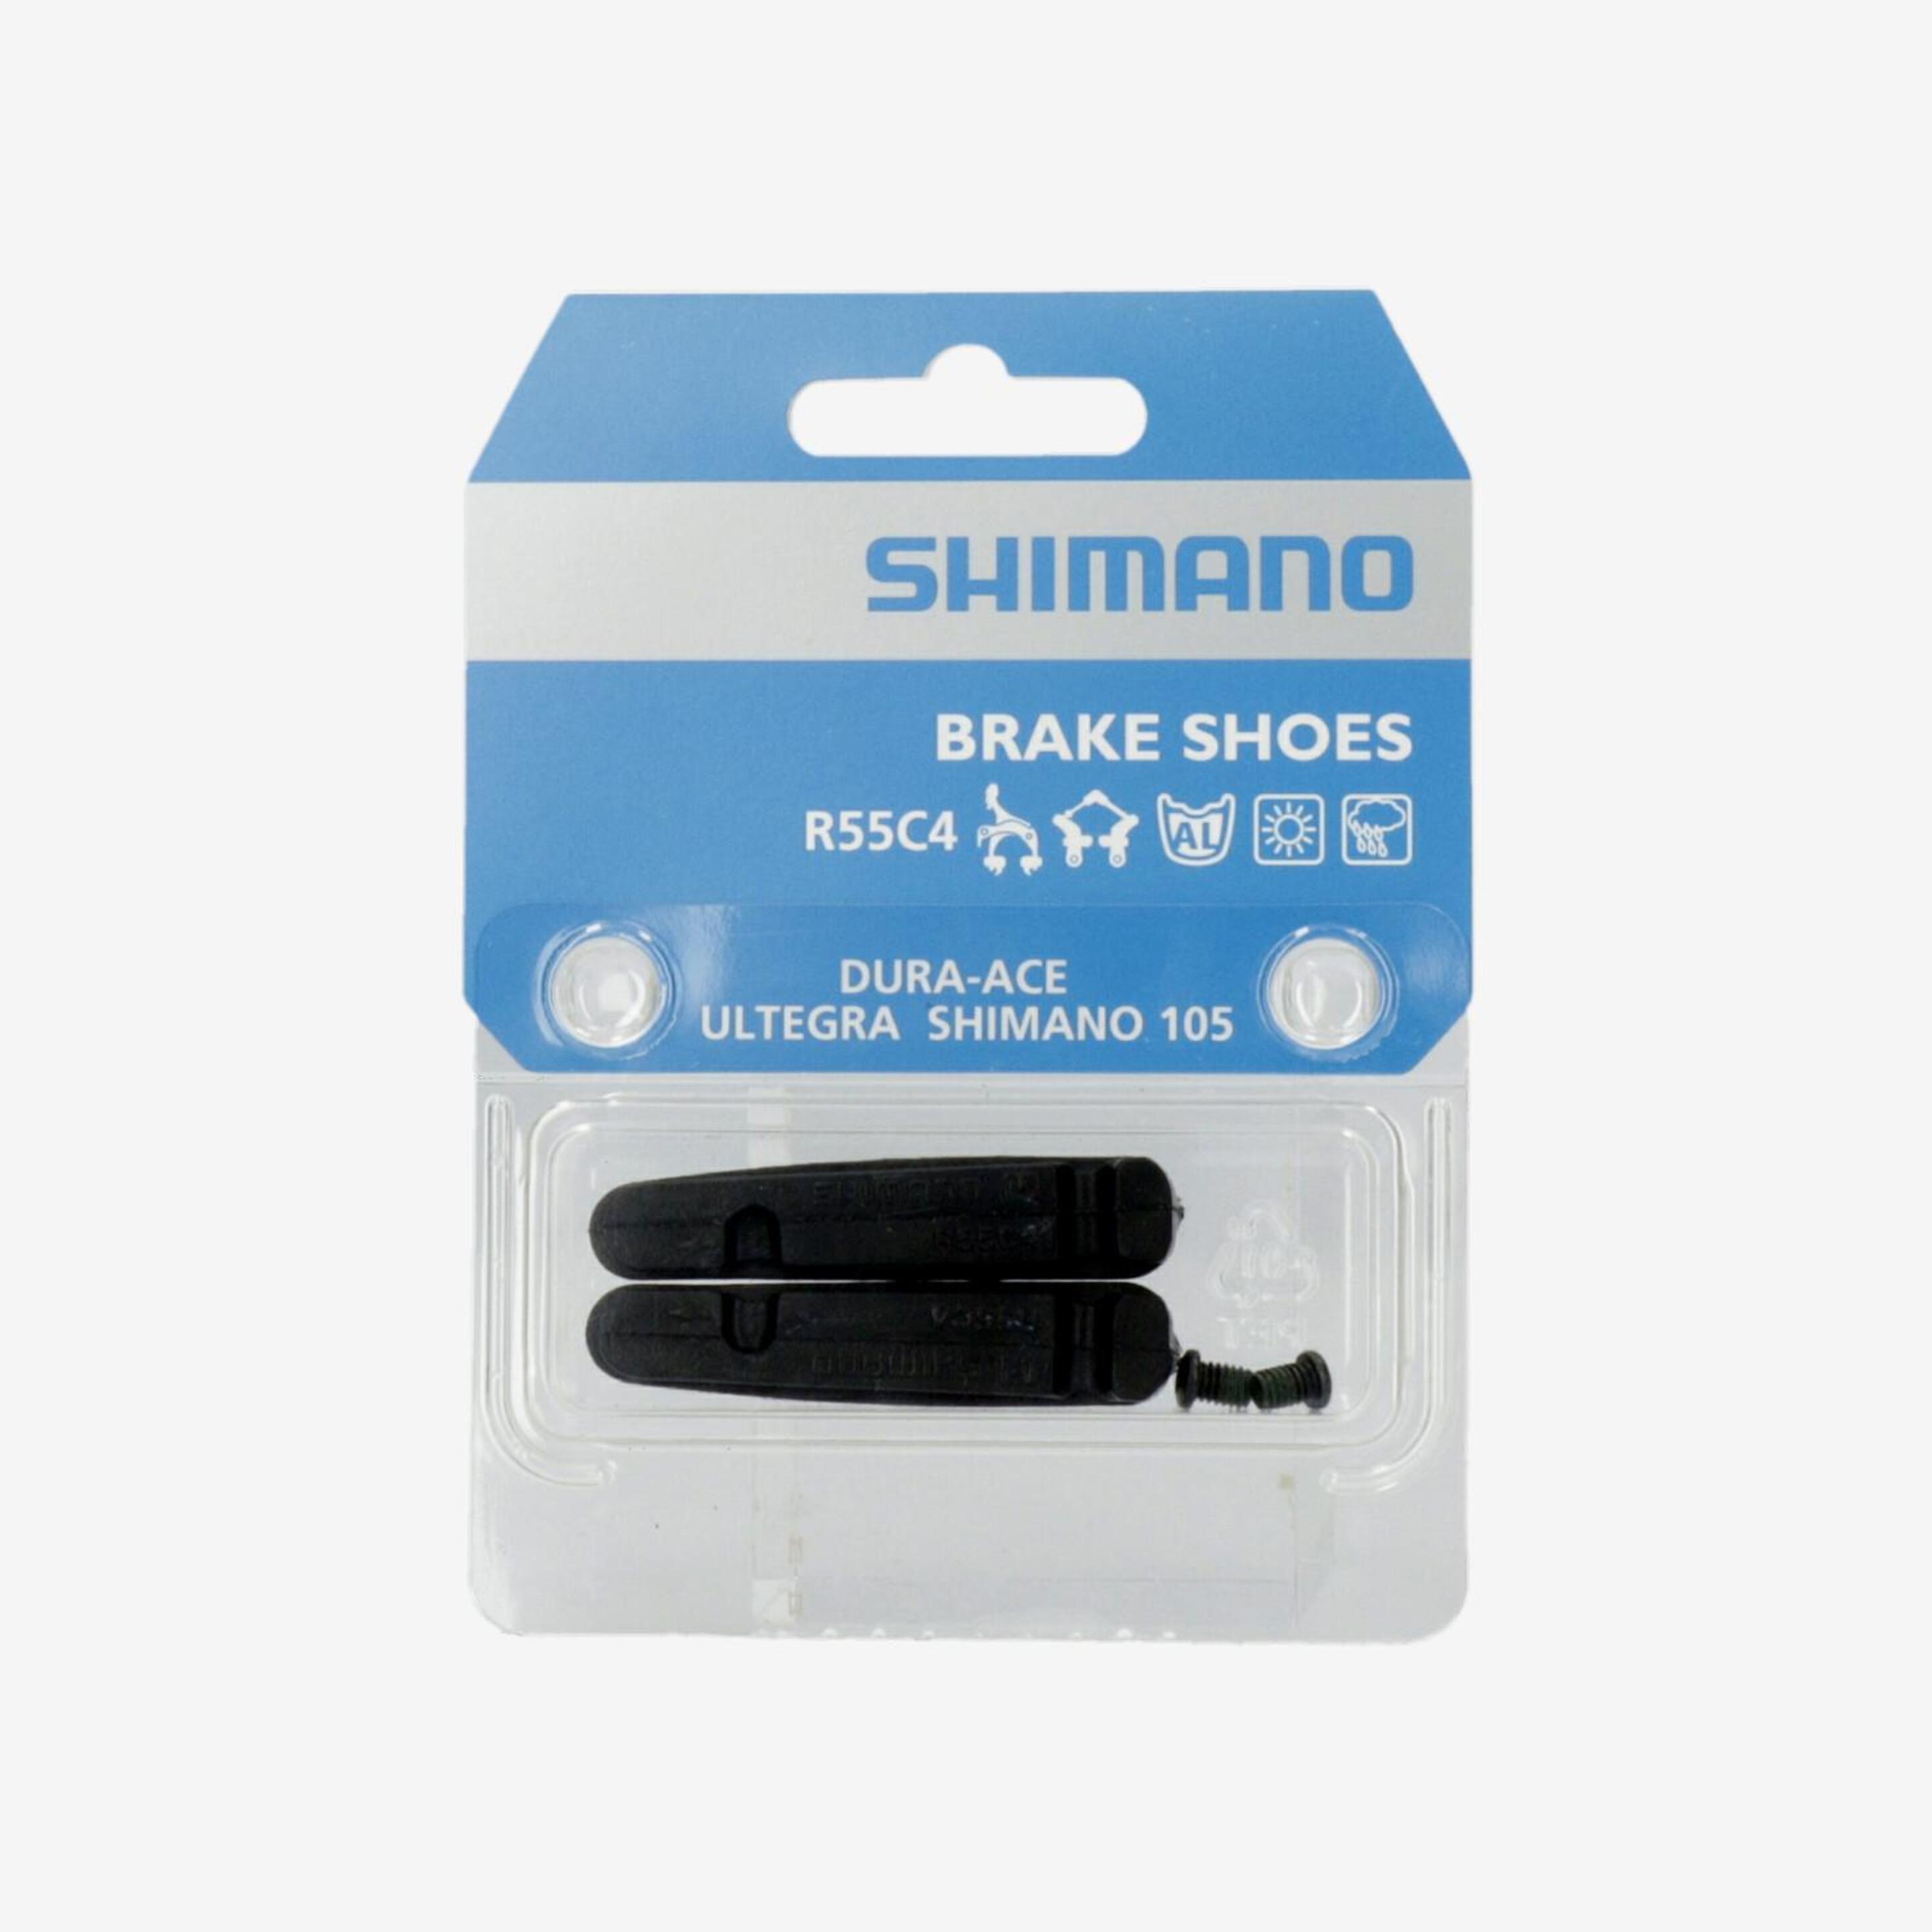 Shimano R55c4 - negro - Zapatas Freno